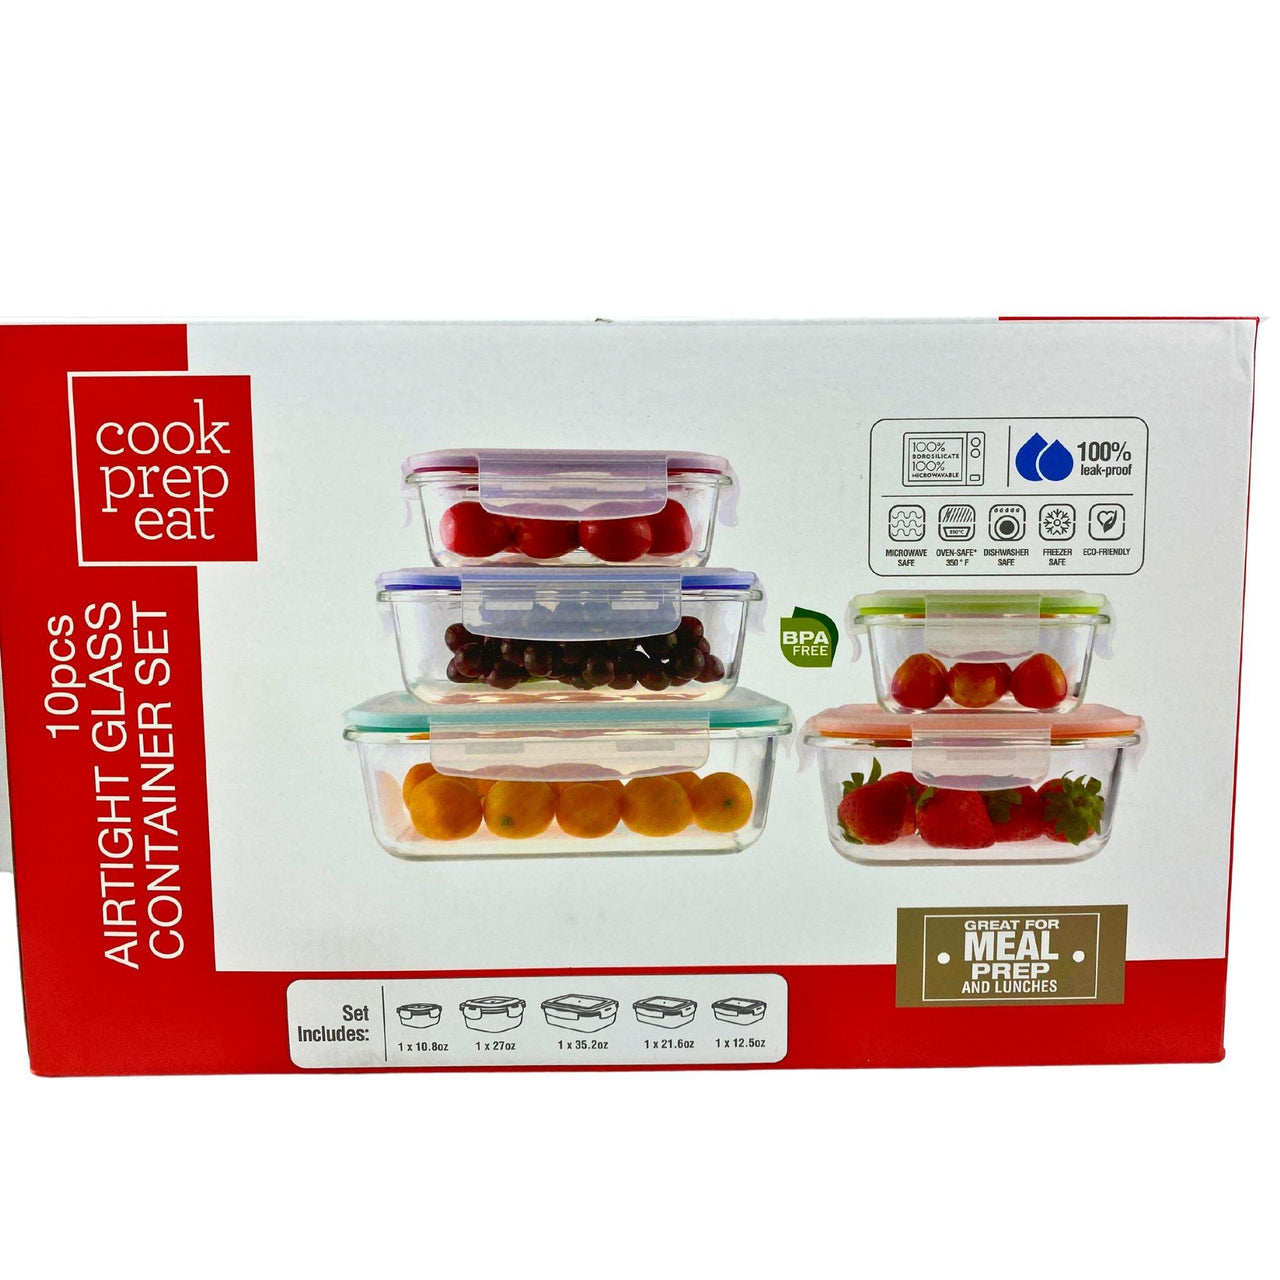 Cook Prep Eat 10pcs Airtight Glass Container Set Assorted Sizes/Colors (20 Pcs Lot) - Discount Wholesalers Inc